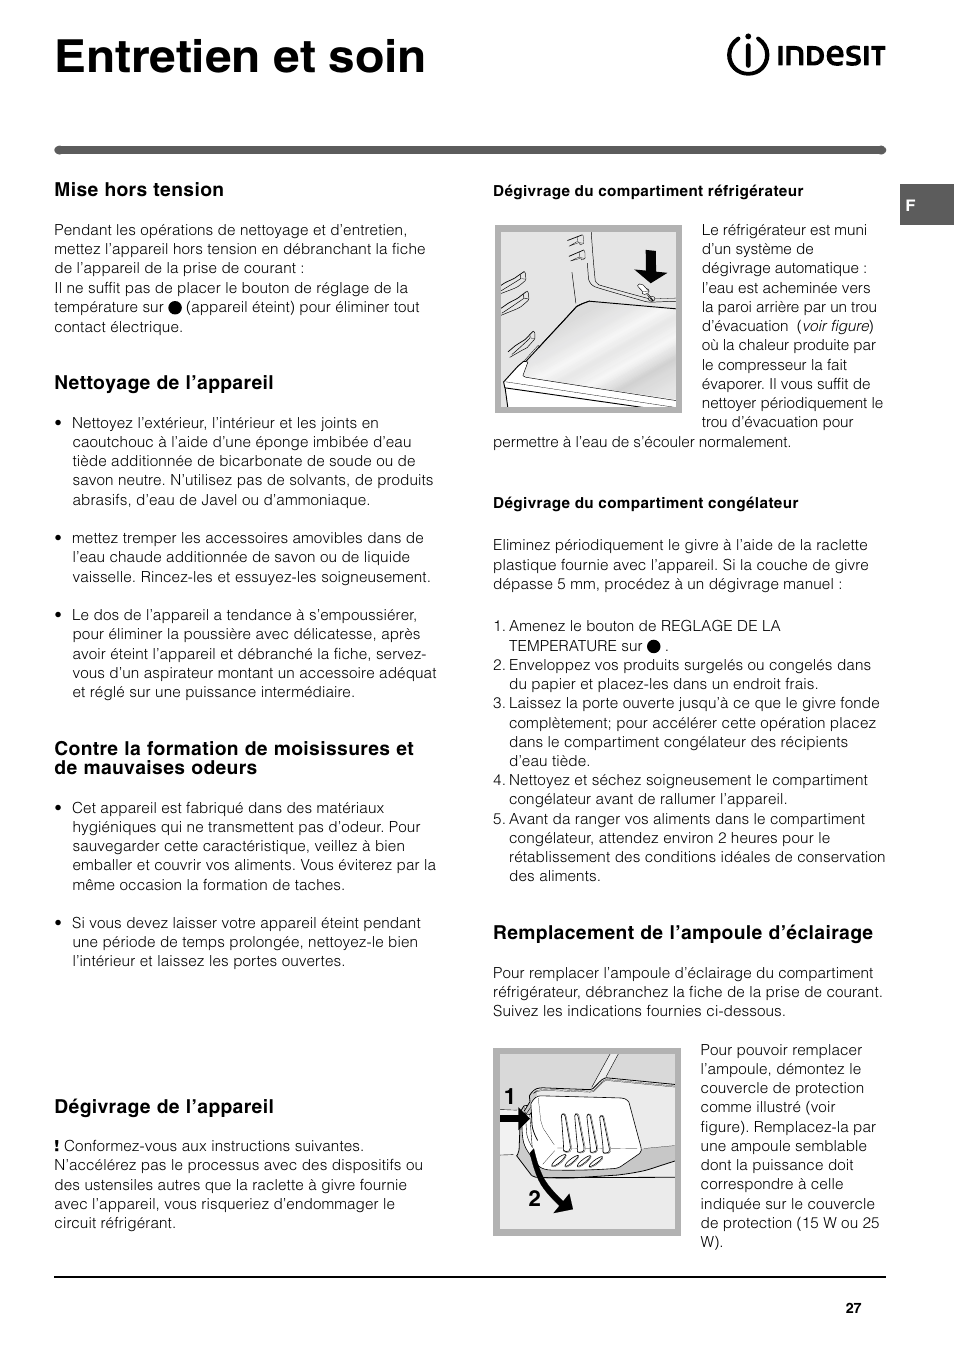 Entretien et soin | Indesit TAAN 2 X User Manual | Page 27 / 60 | Original  mode